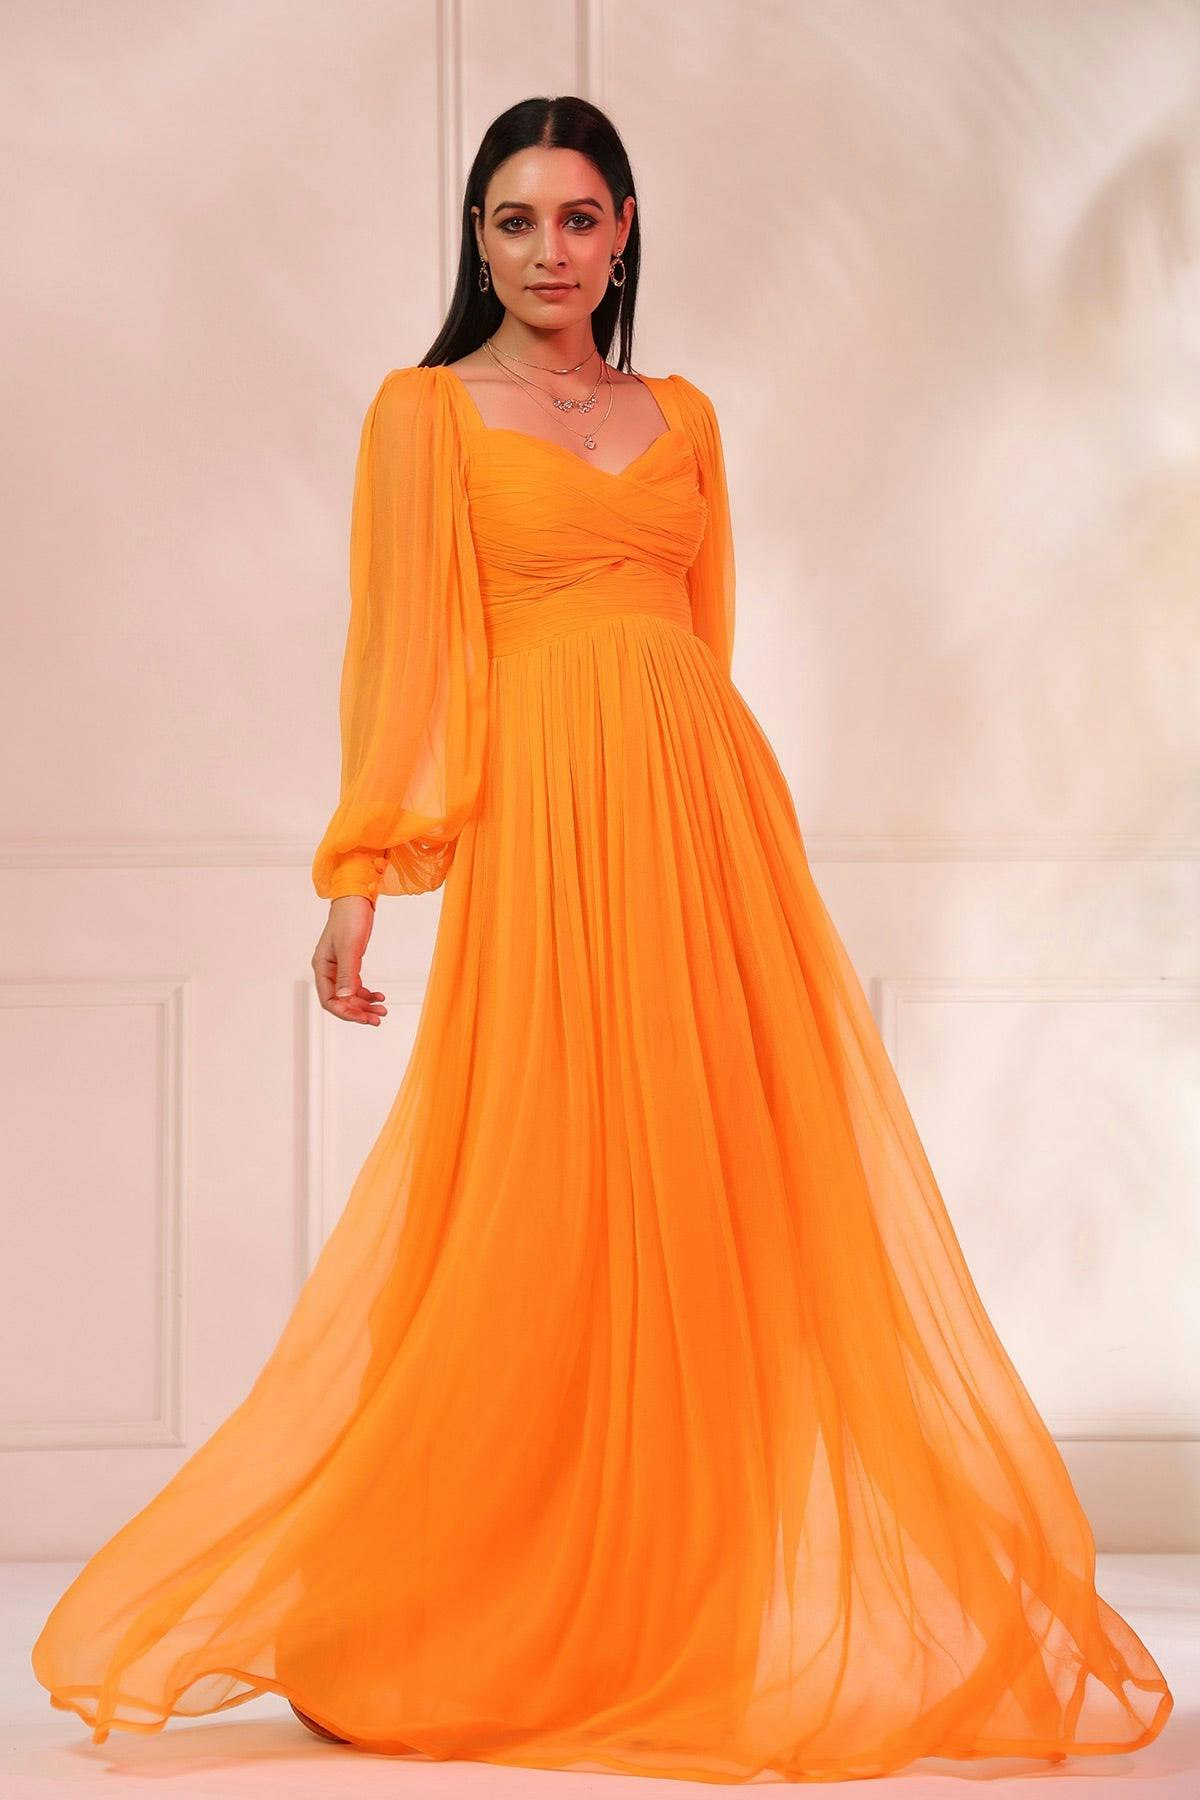 Grace Orange dress, a product by Baise Gaba